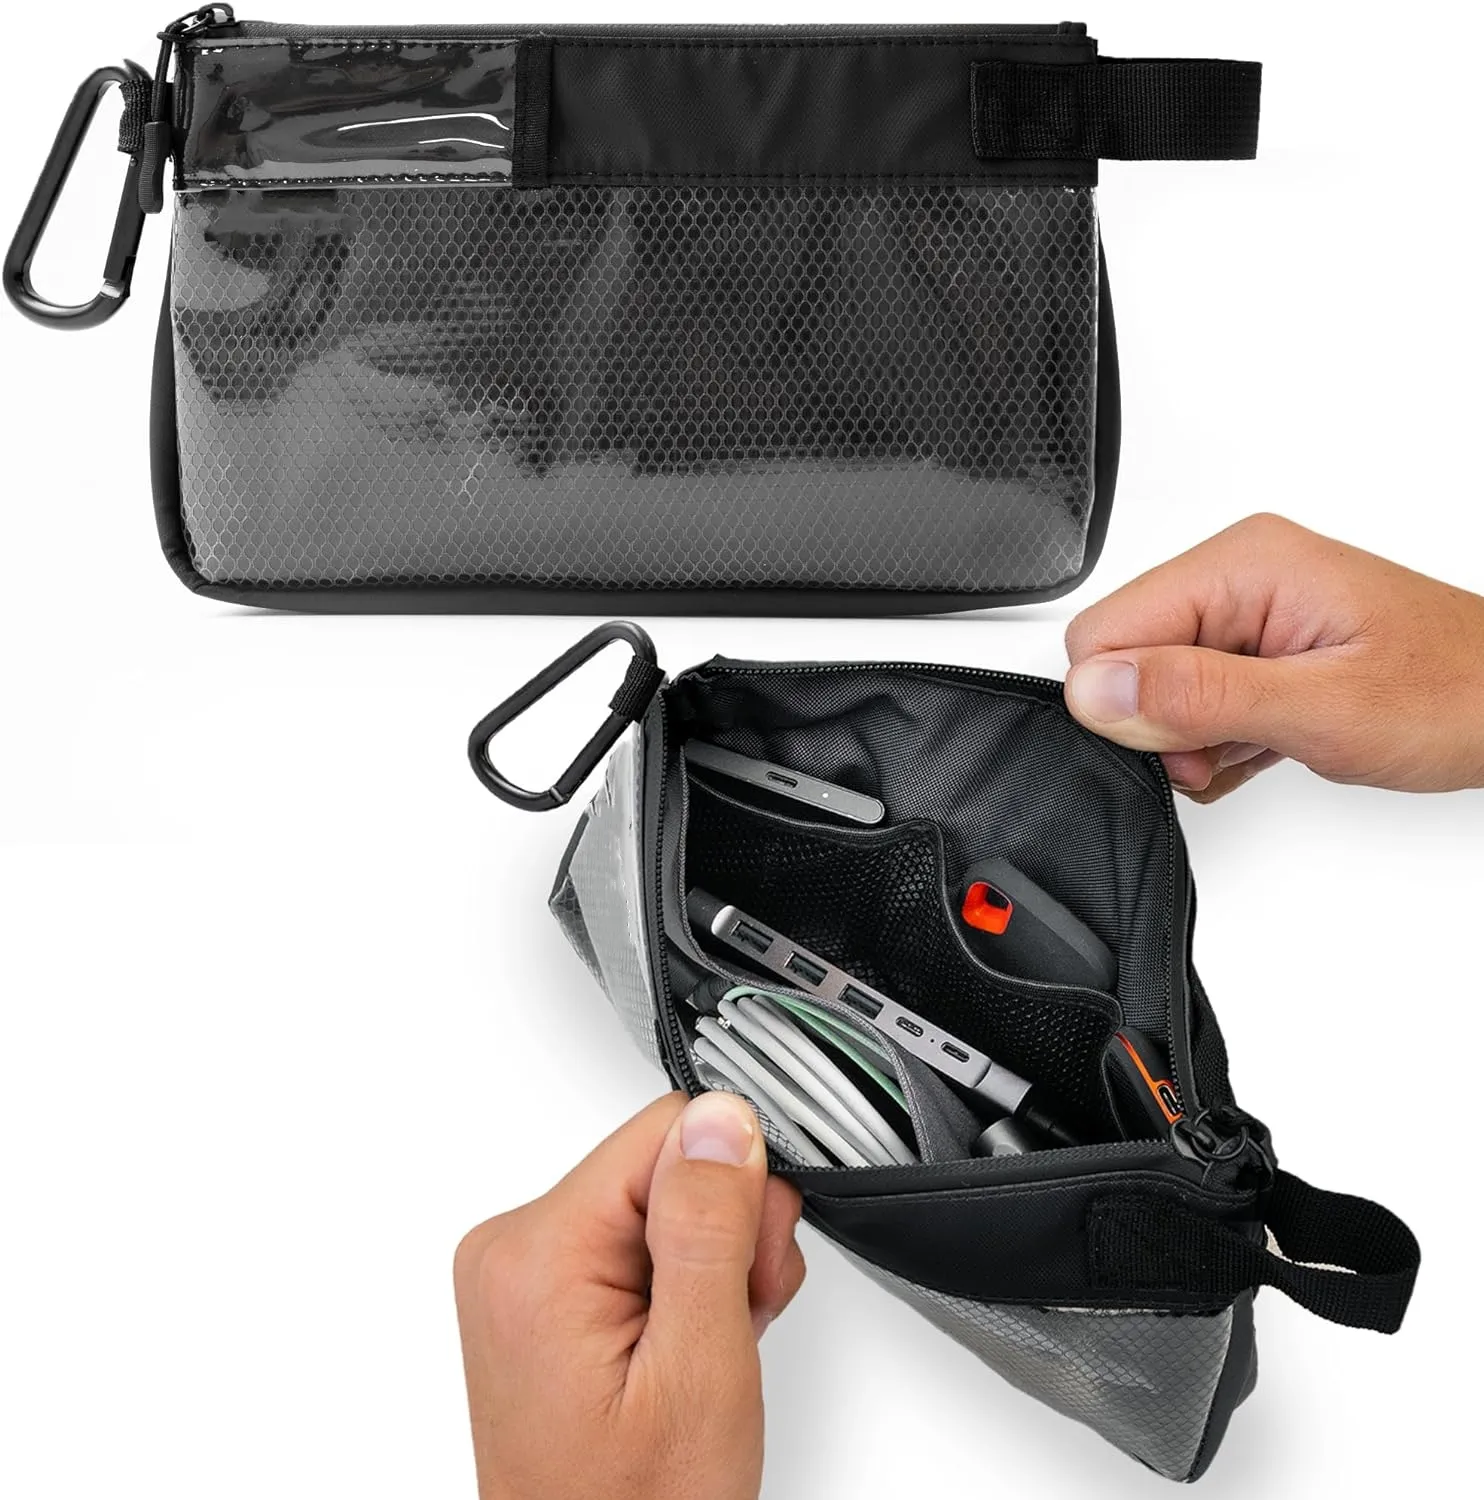 Bolsa de Cable Digital con múltiples bolsillos a prueba de polvo, bolsa de accesorios para cámara fácil de llevar, bolsas de almacenamiento duraderas con cremallera de poliéster 600D